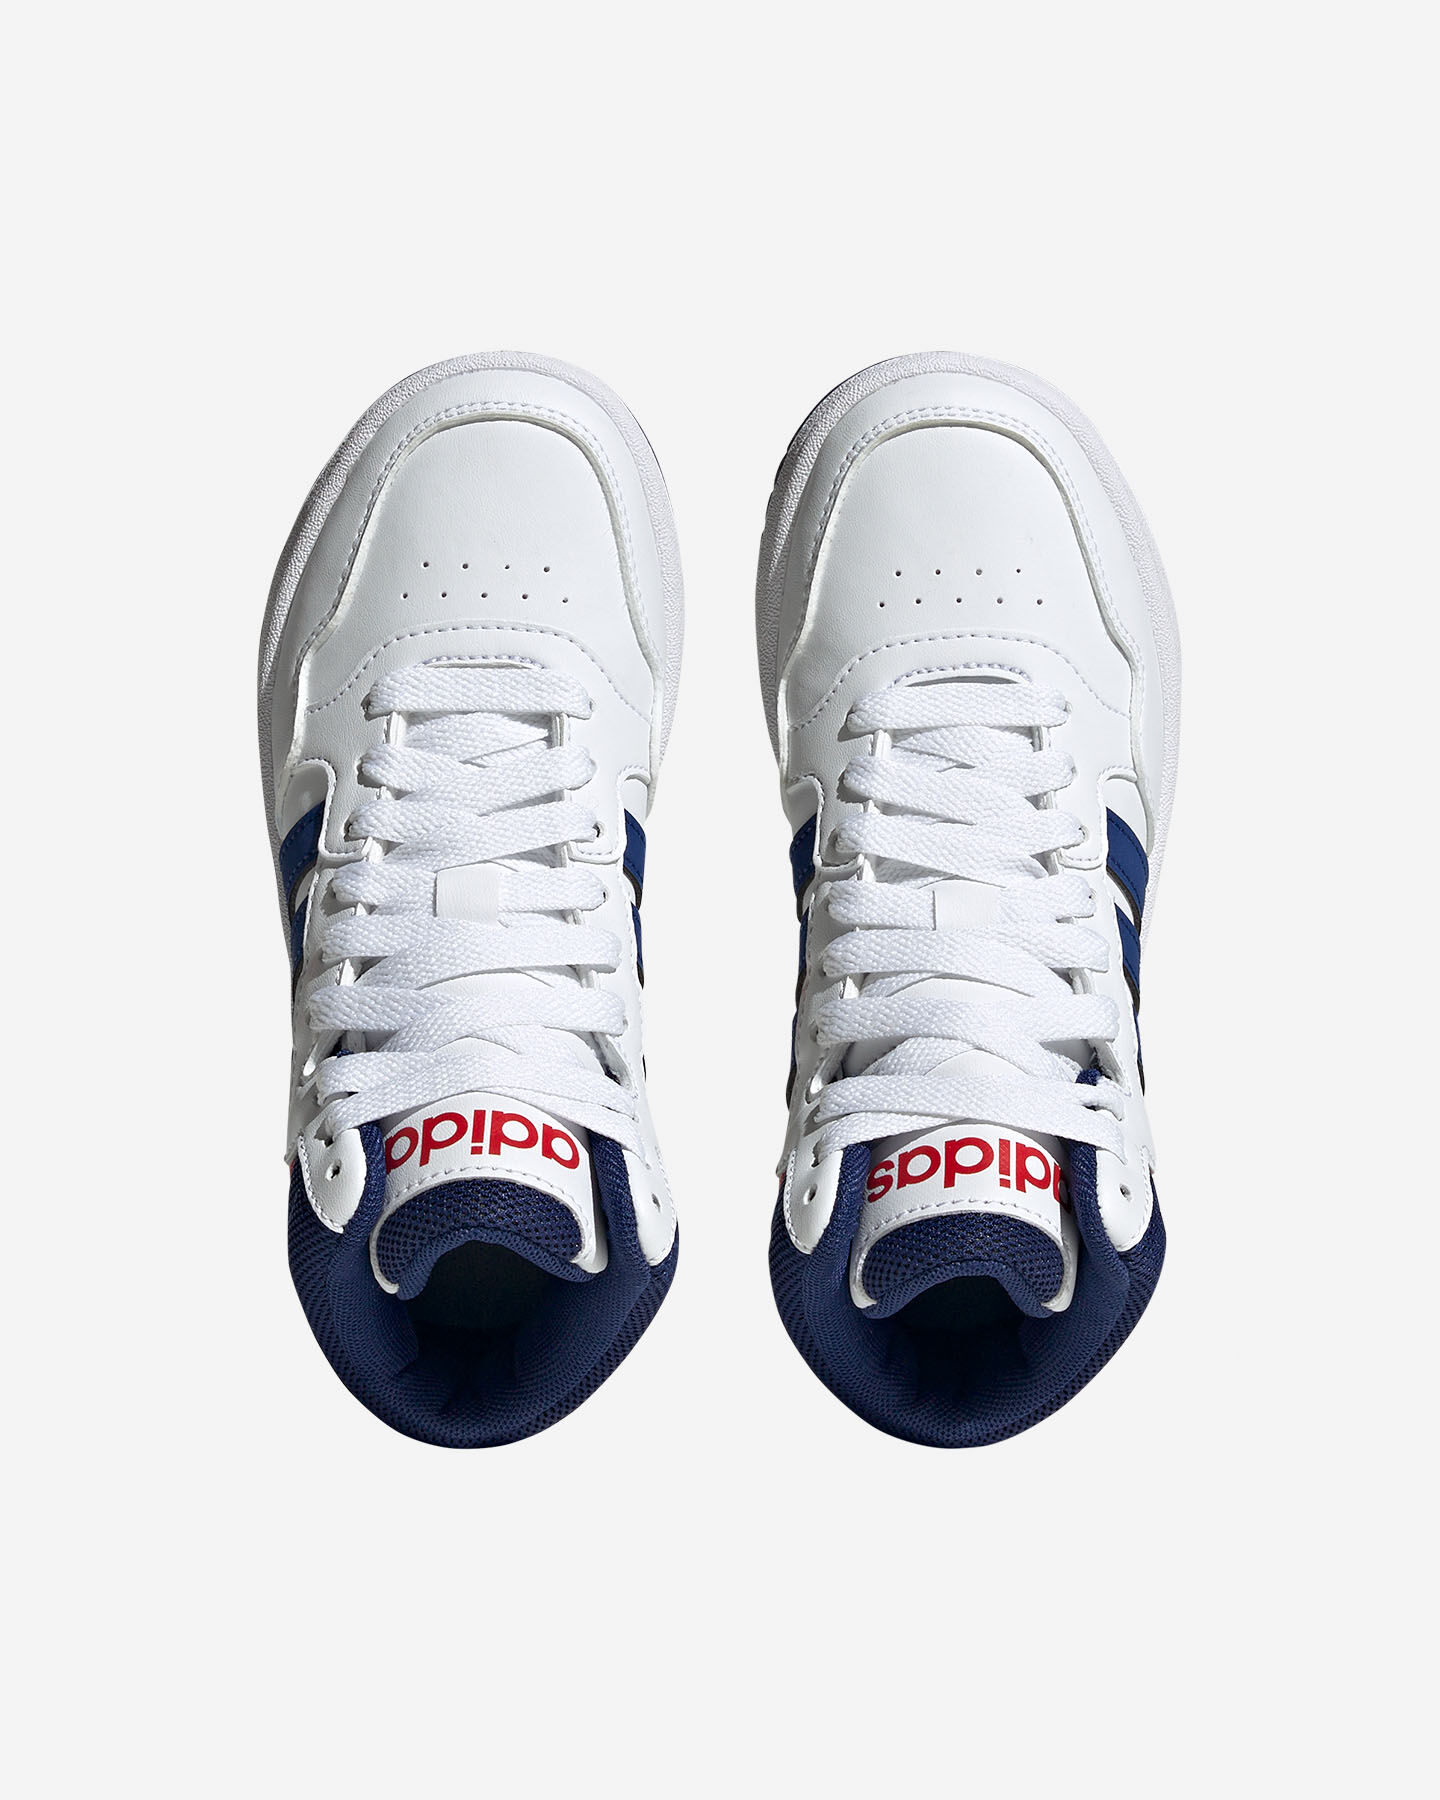  Scarpe sneakers ADIDAS HOOPSID GS JR S5549064|UNI|5- scatto 2